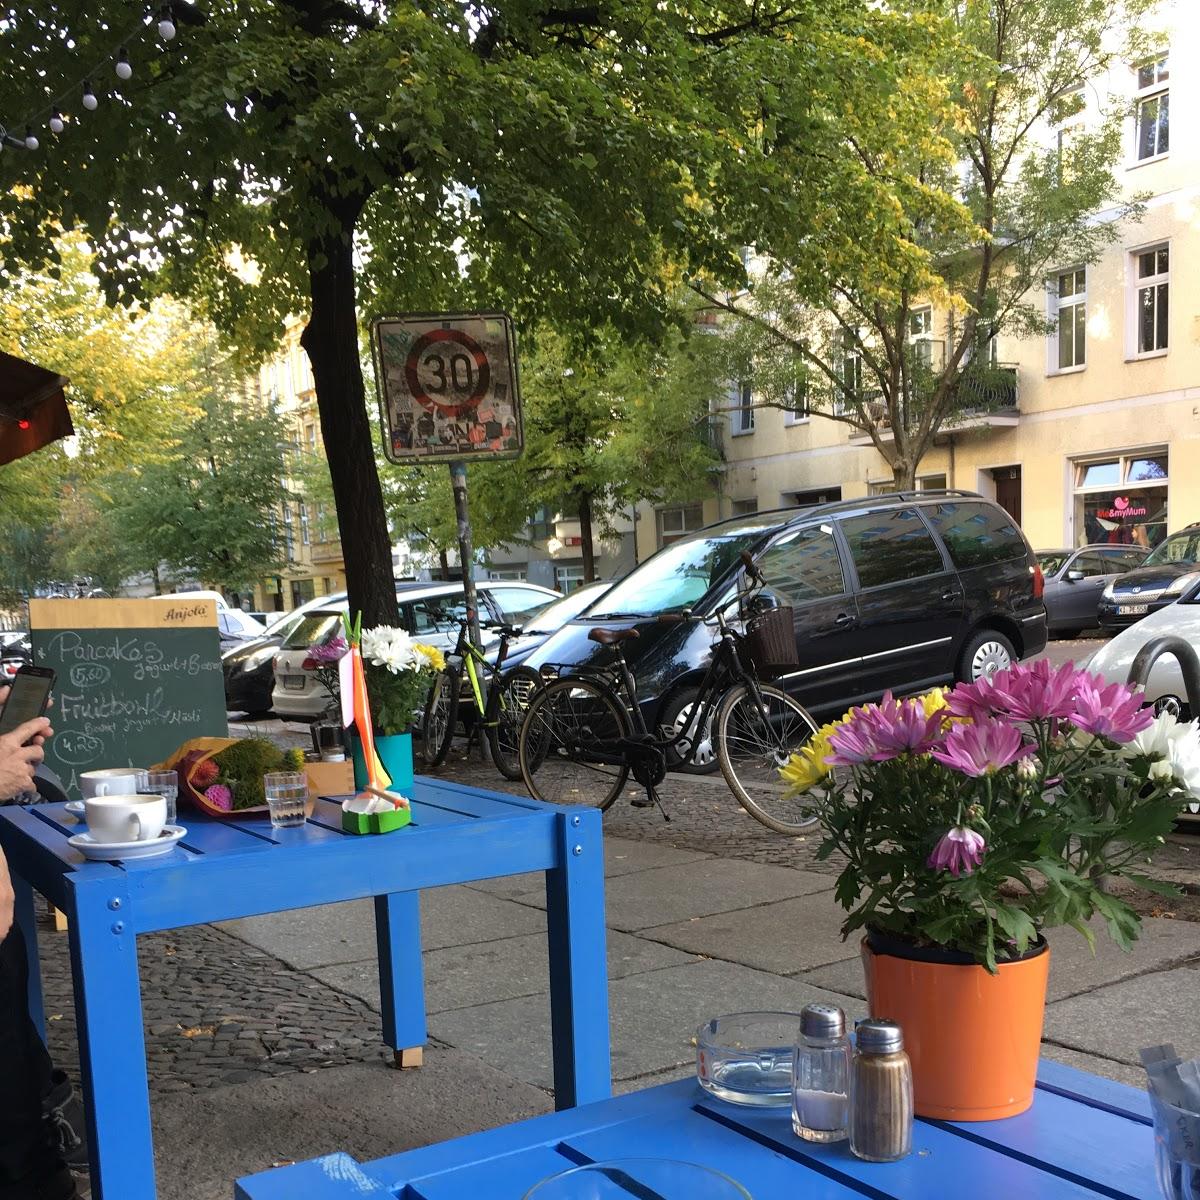 Restaurant "Bootshaus Café" in Berlin